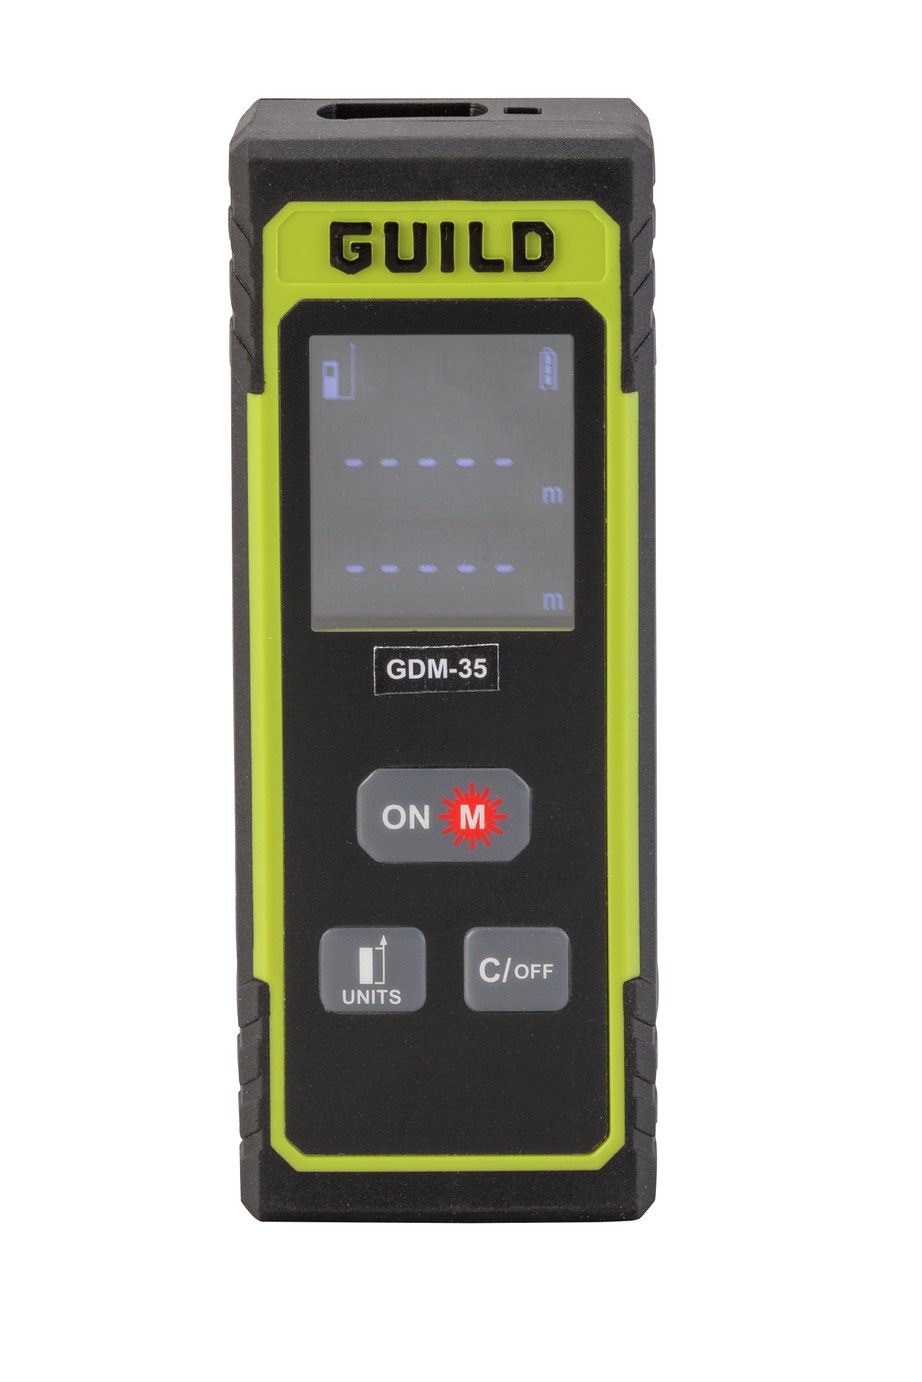 Guild 30m Laser Measure